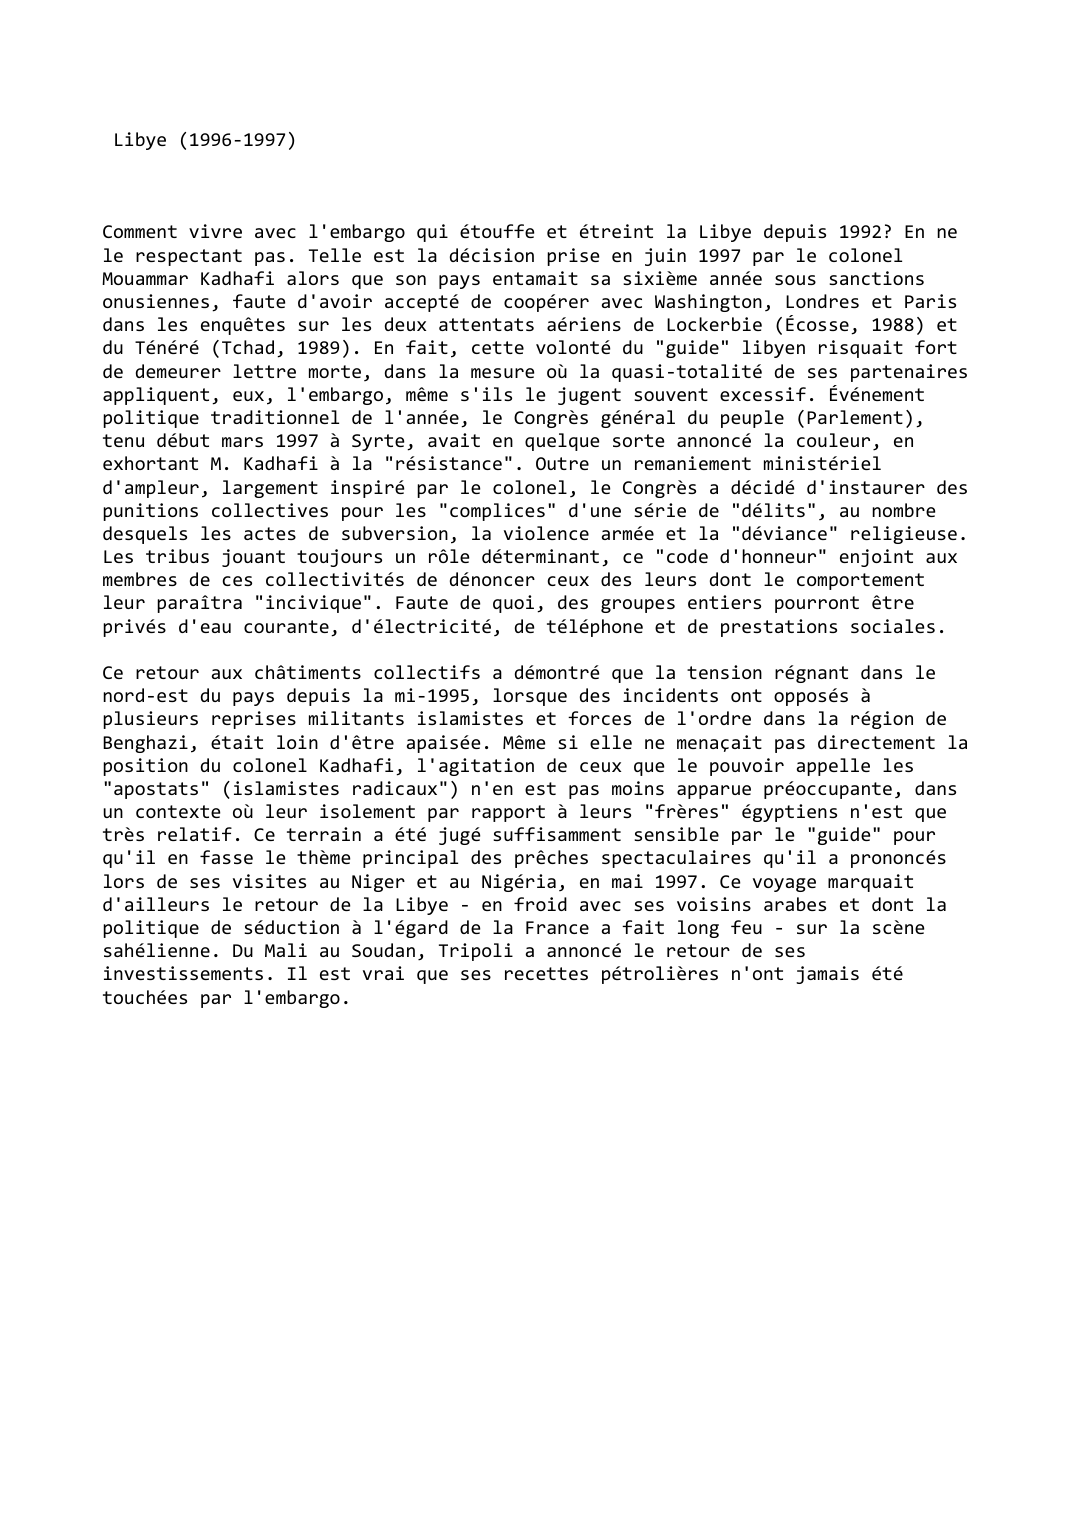 Prévisualisation du document Libye (1996-1997)